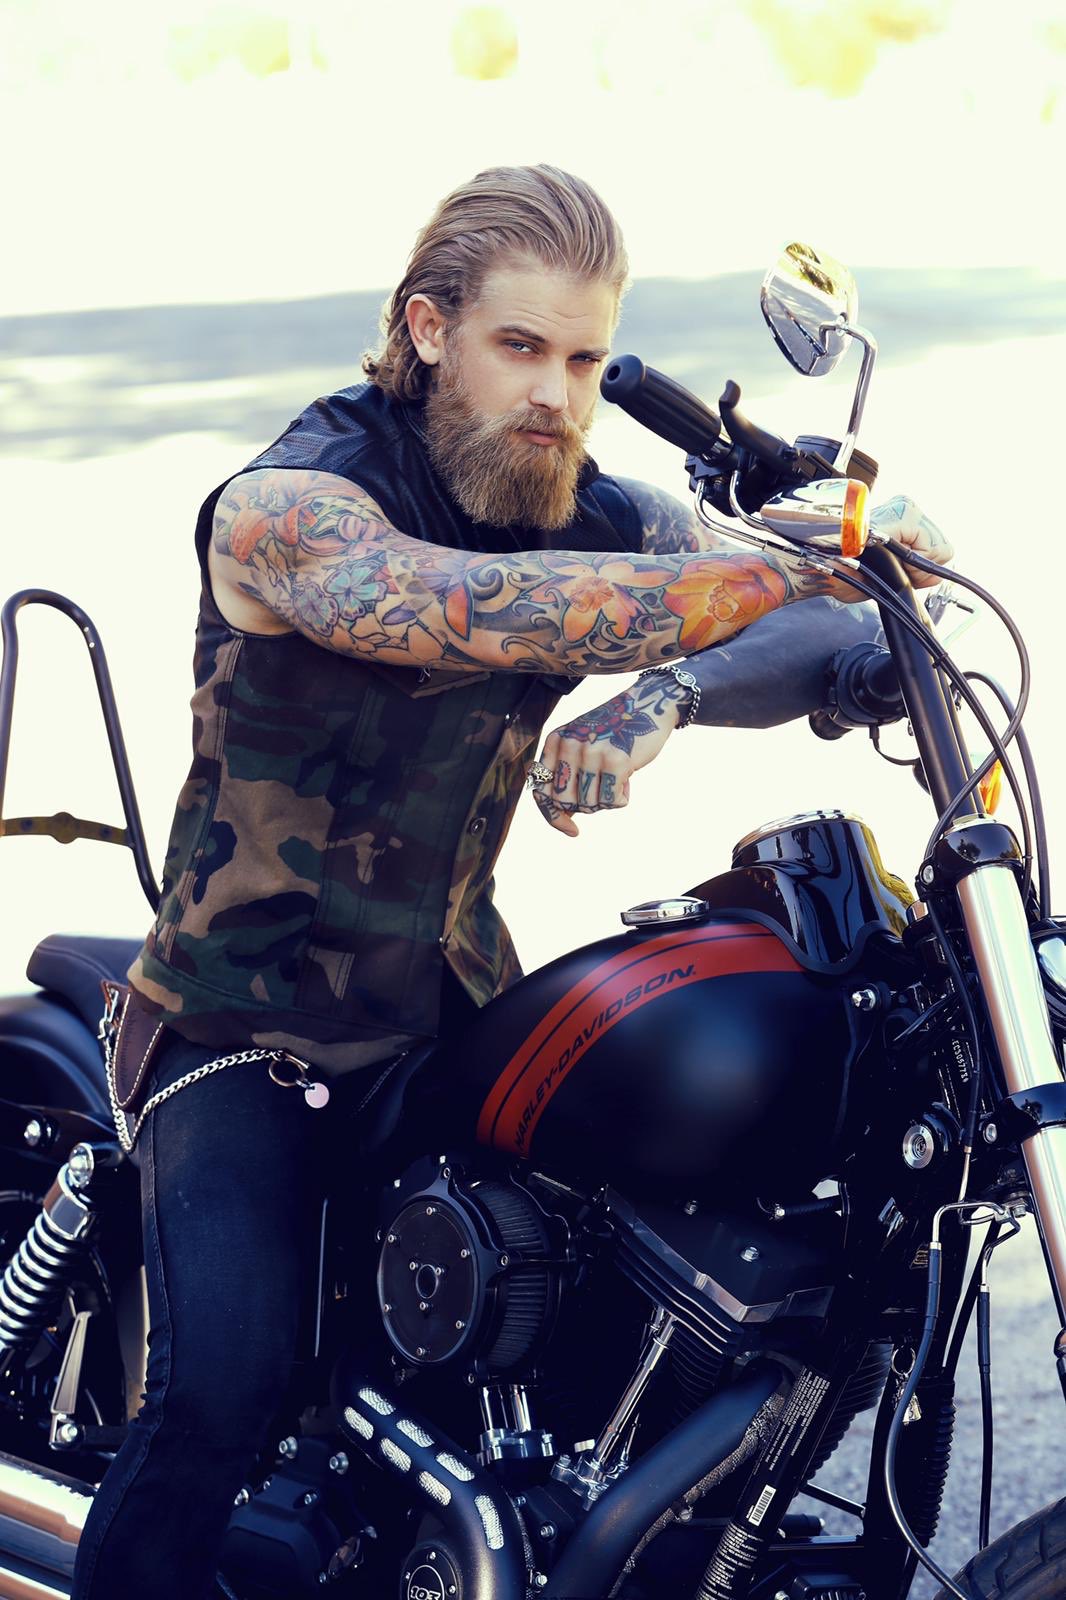 Biker Family | Biker tattoos designs, Biker tattoos, Motorcycle tattoos